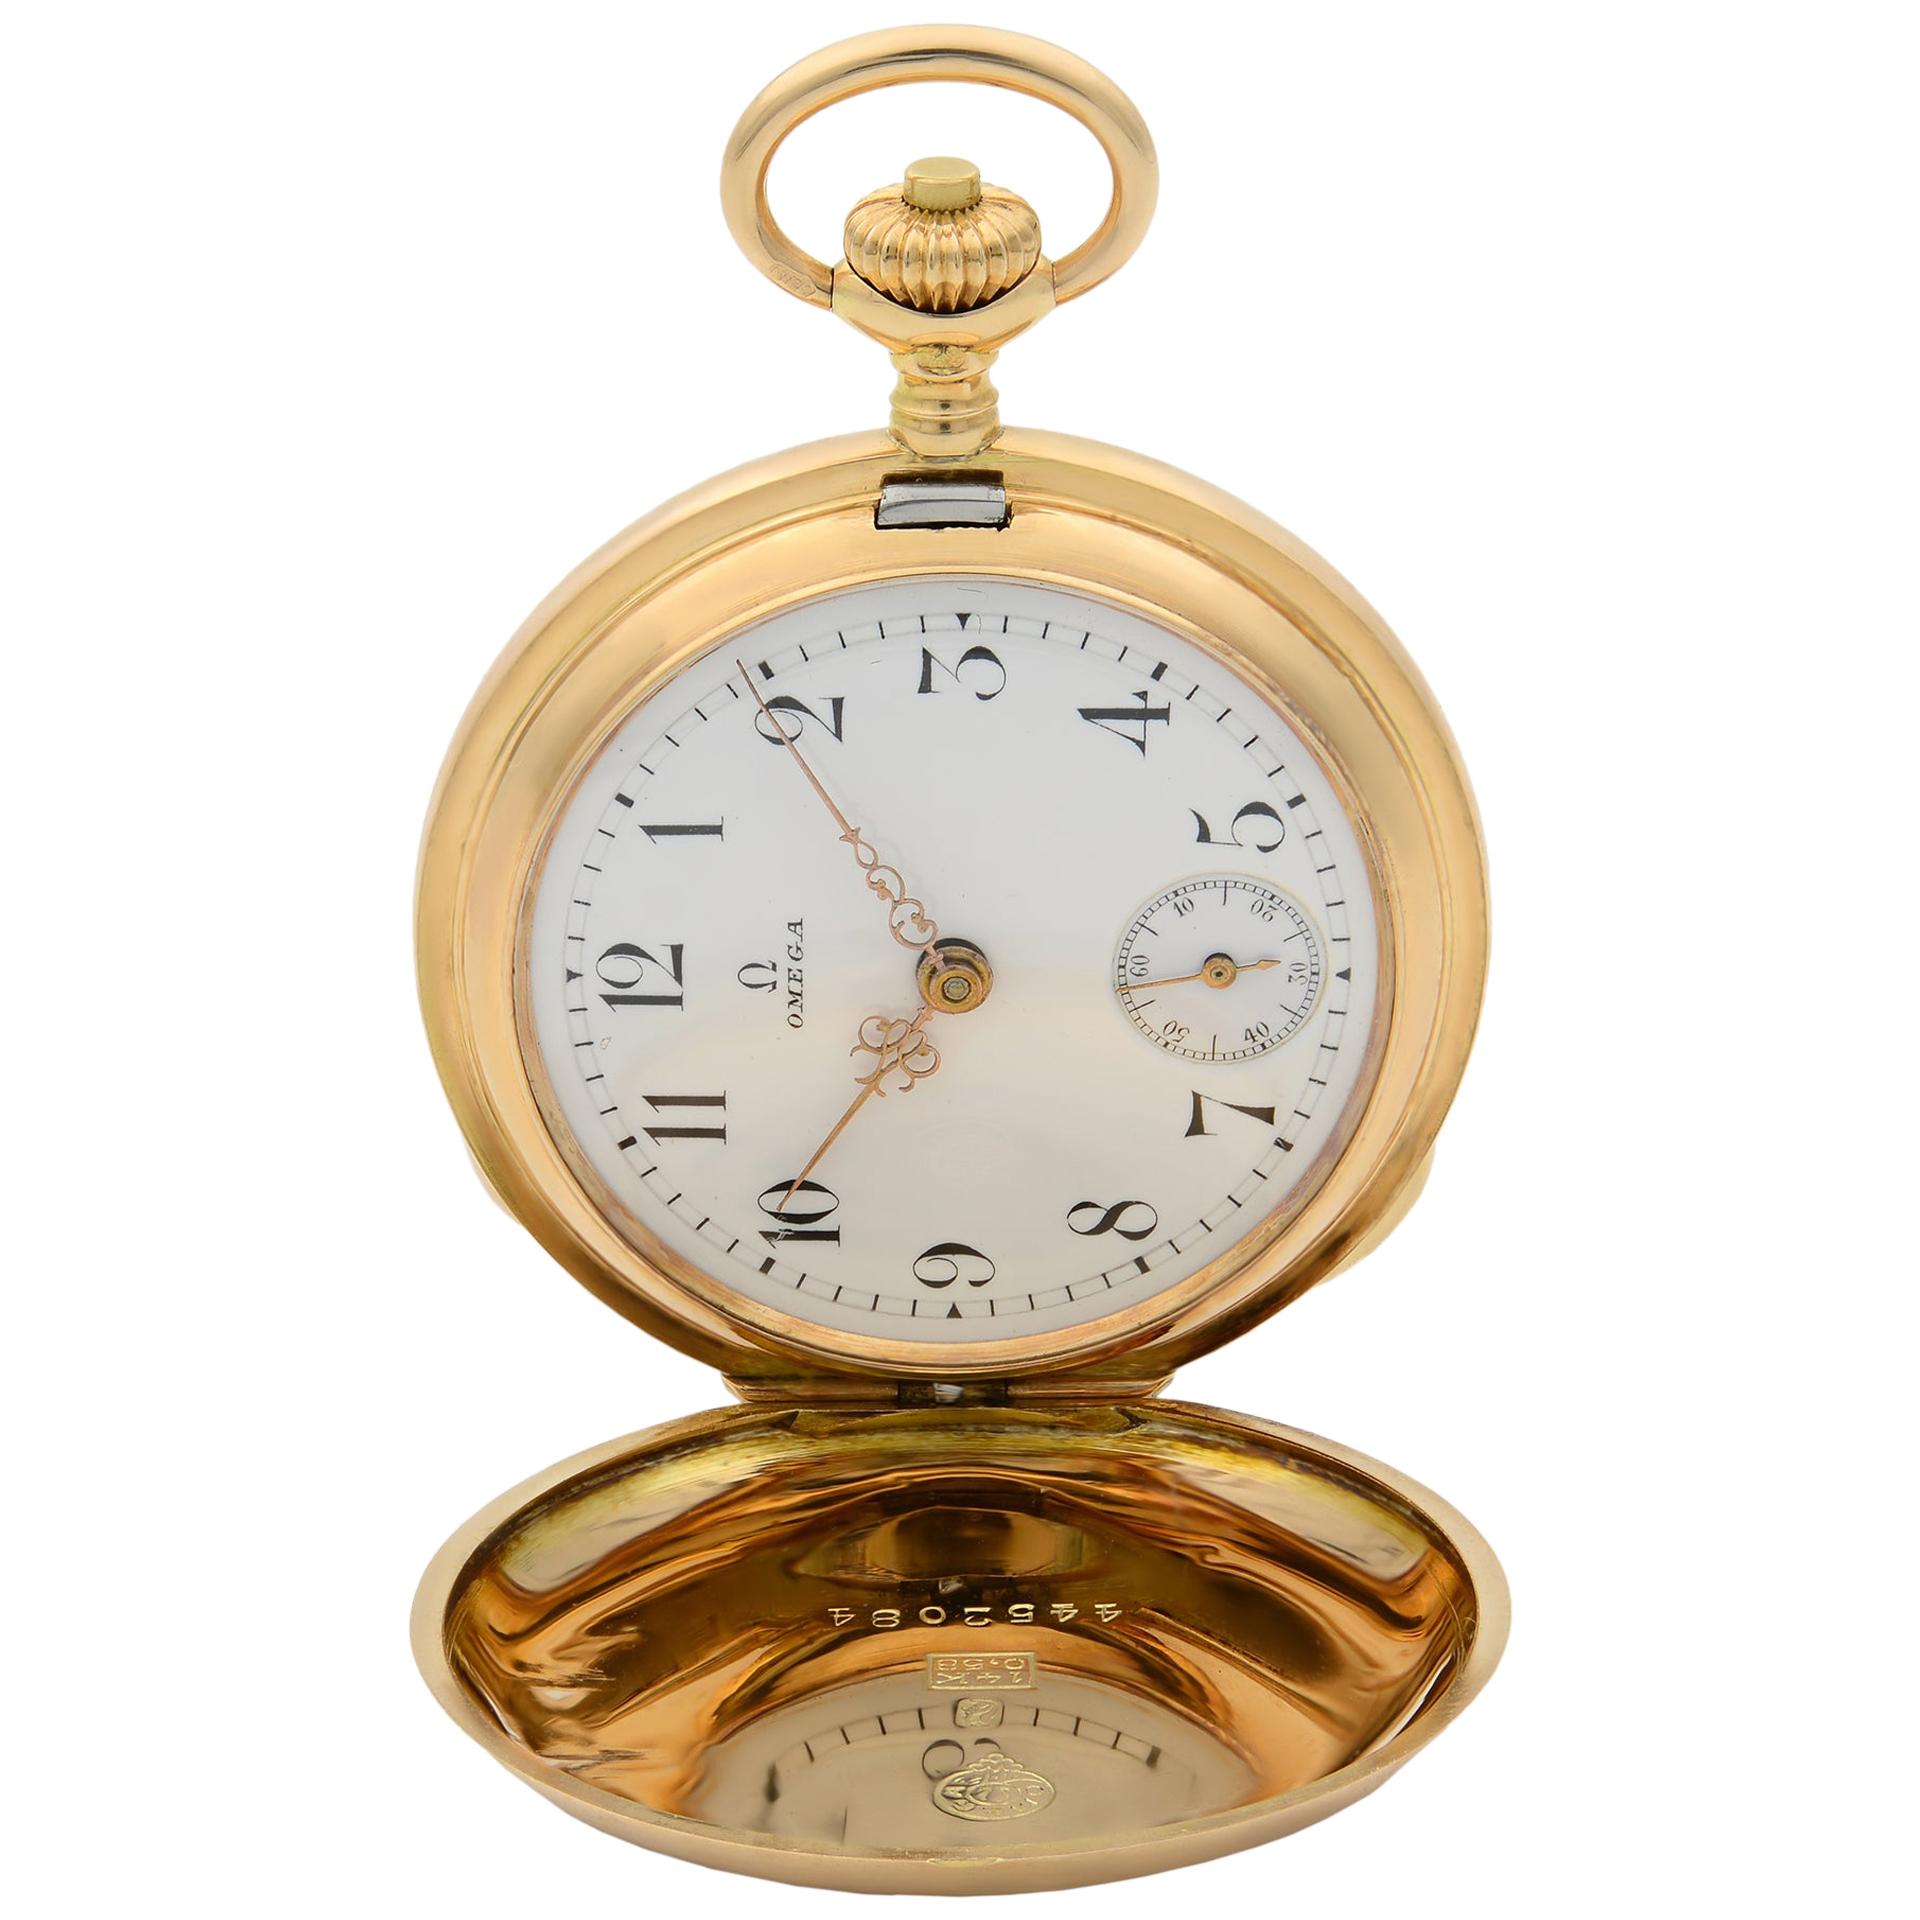 Omega Grand Prix Paris 1900 14 Karat Gold Manual Wind Pocket Watch